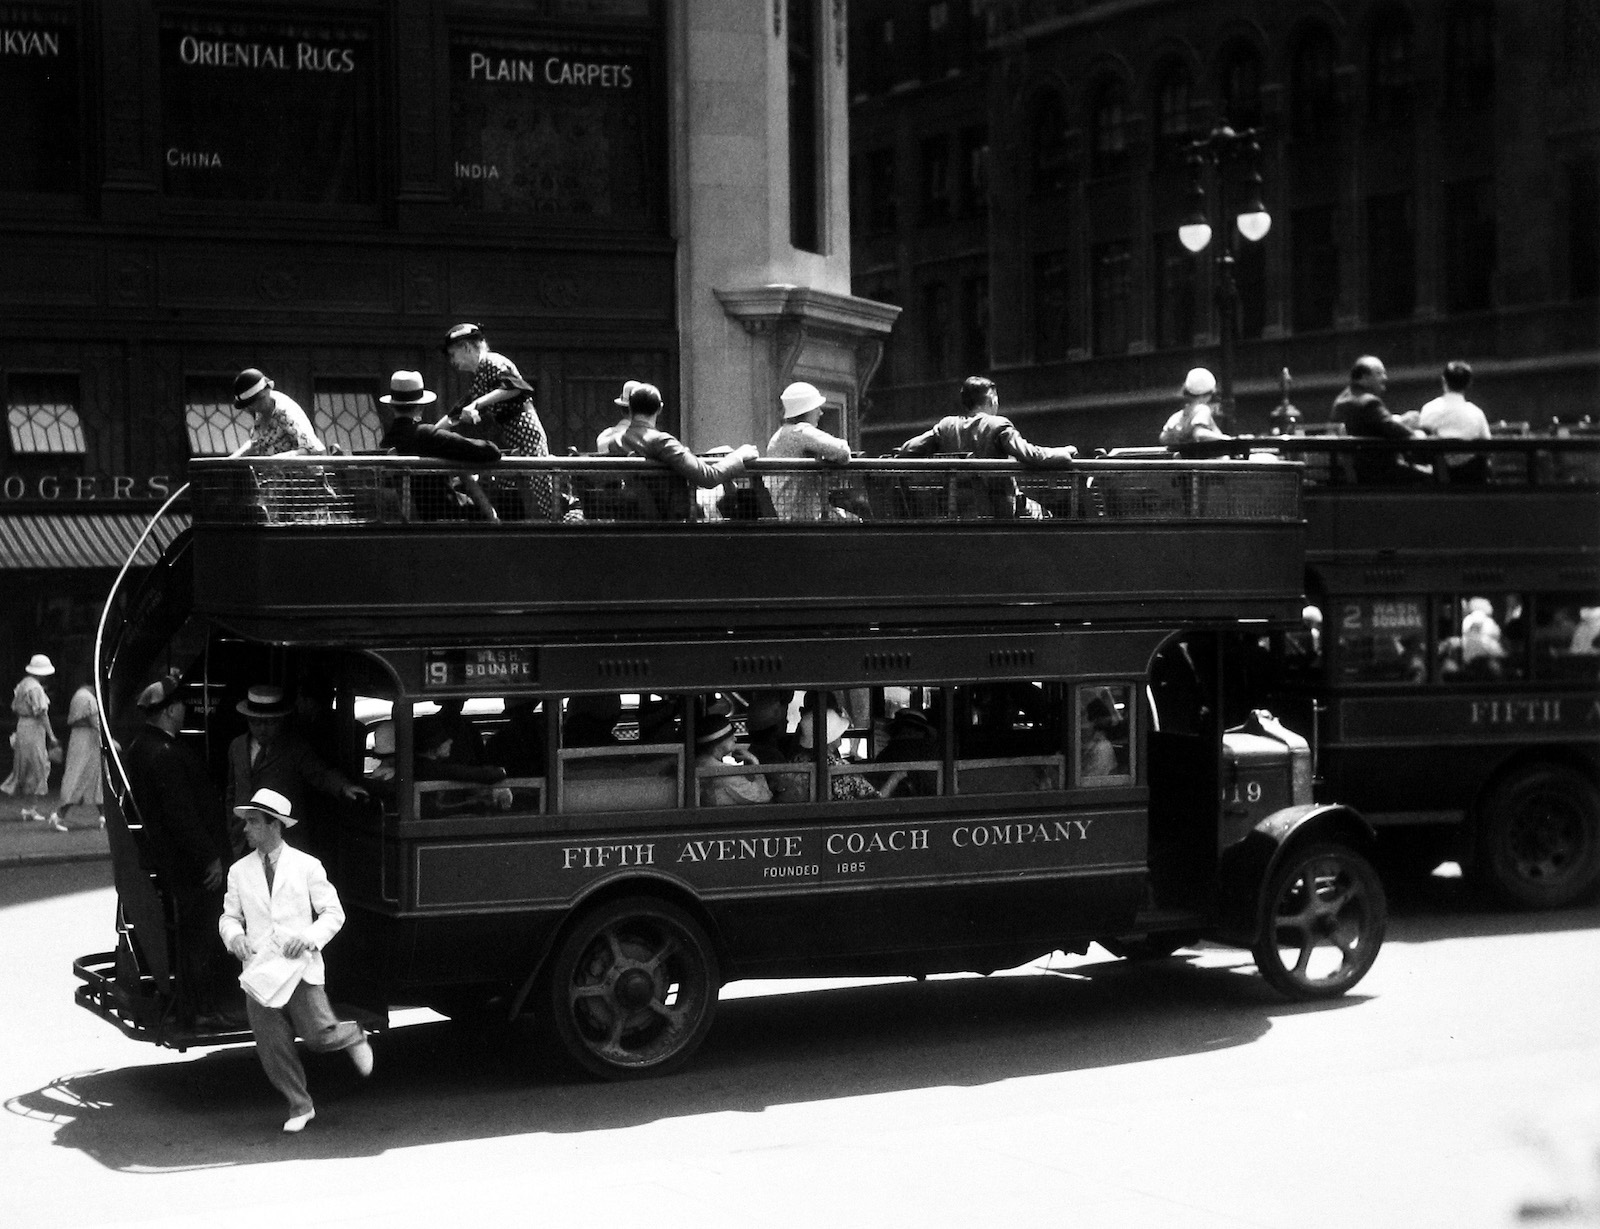 Fifth Avenue Coach Company, New York, 1932